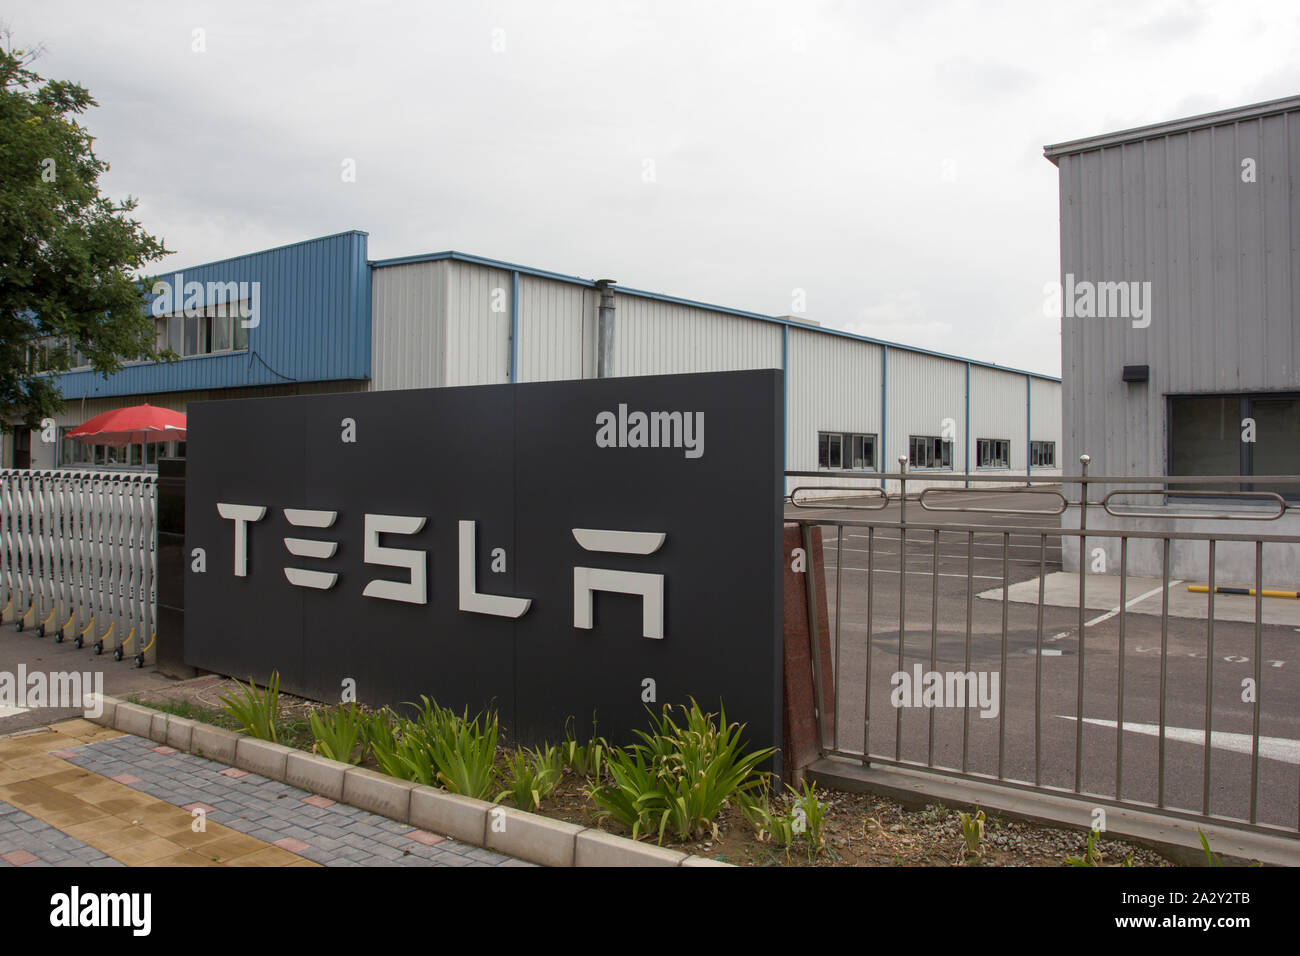 The Tesla logo is seen at Tesla's Beijing facility in suburban Beijing Economic-Technological Development Area on July 29, 2019. Stock Photo